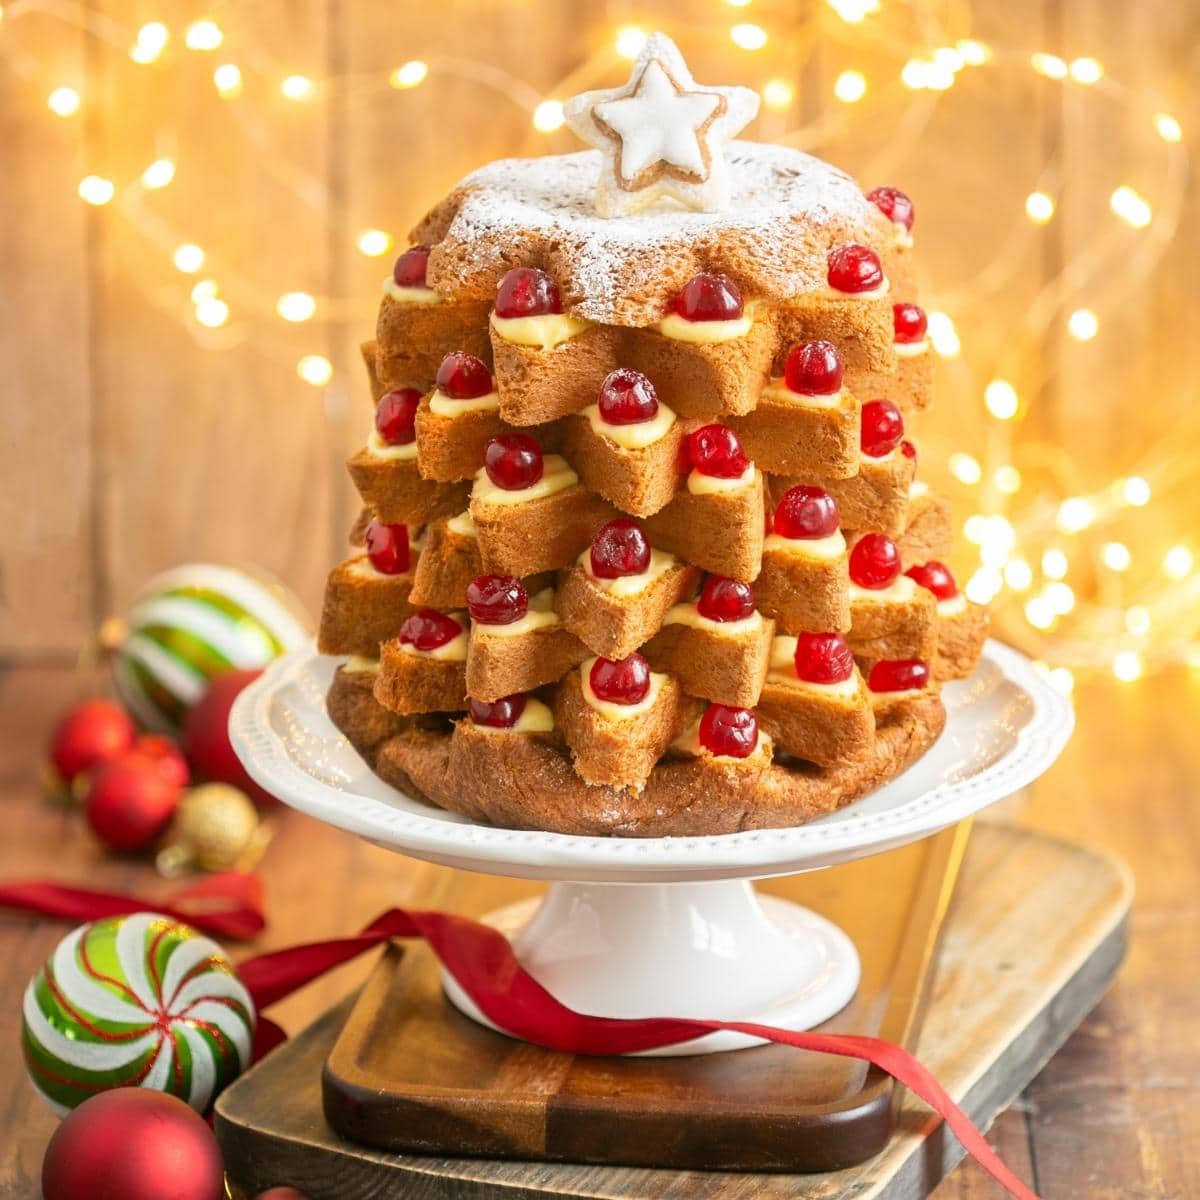 https://www.thepetitecook.com/wp-content/uploads/2021/12/Pandoro-Christmas-Cake-recipe.jpg